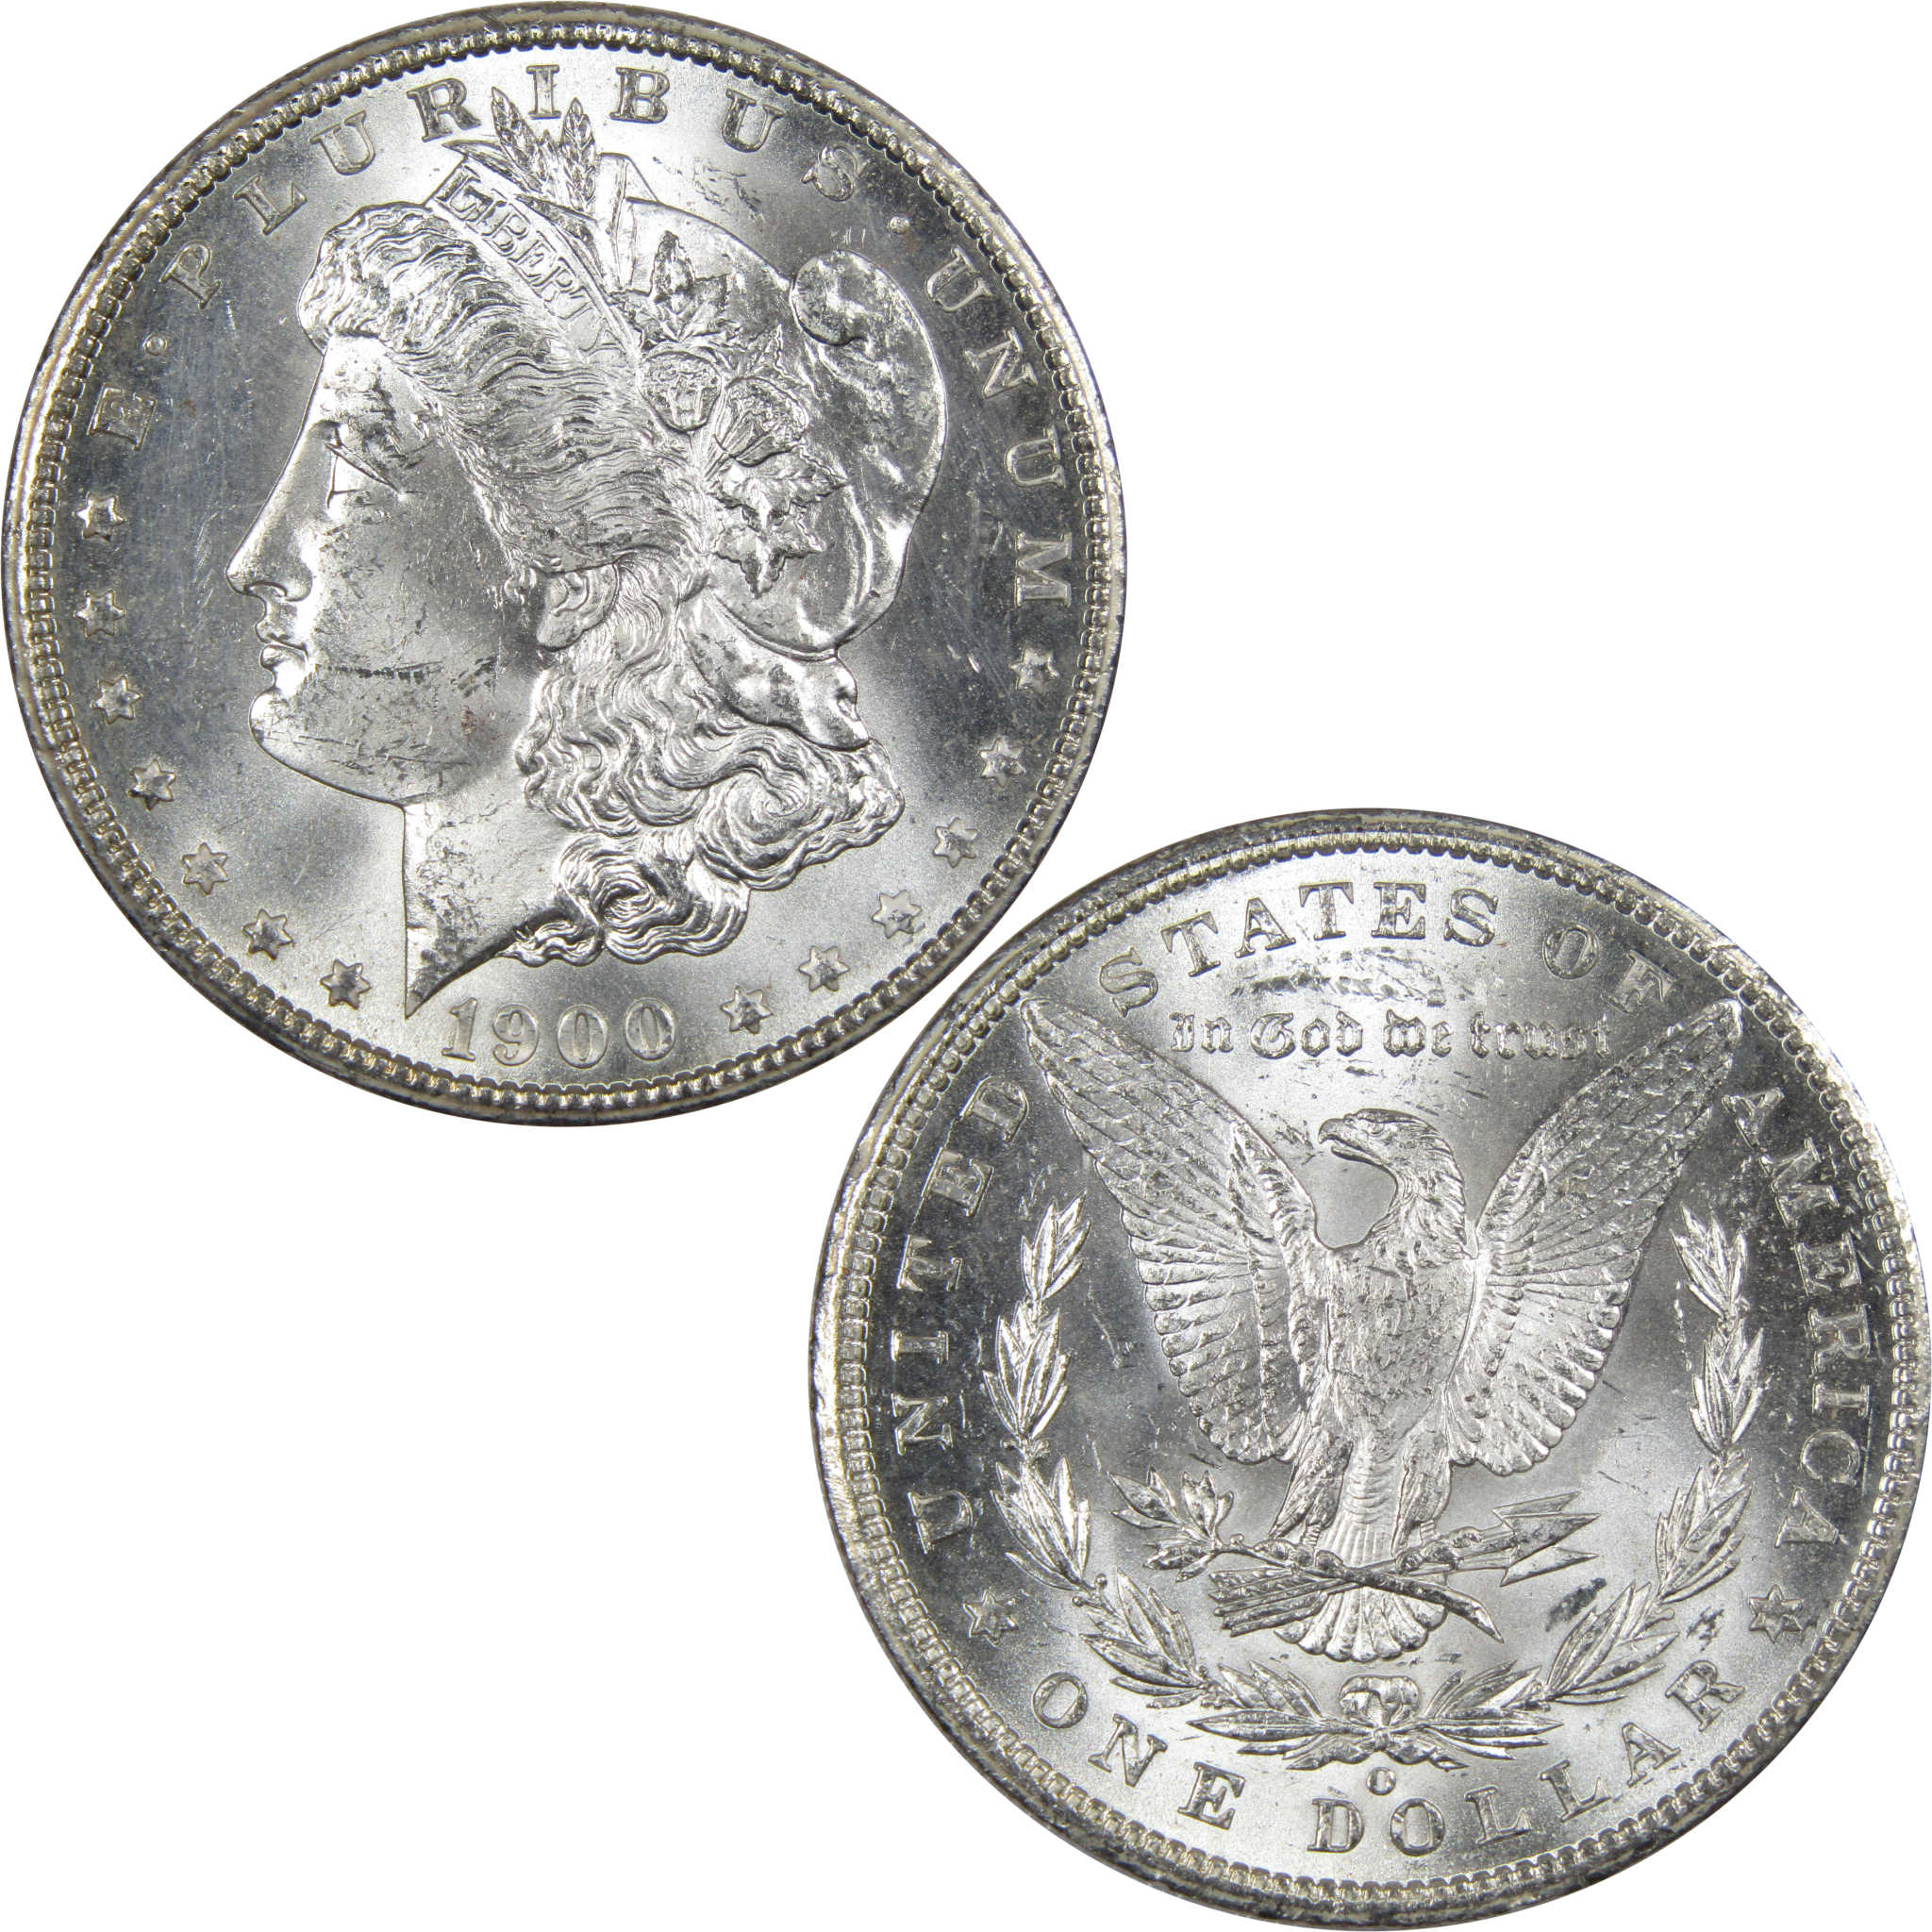 1900 O Morgan Dollar BU Uncirculated Mint State 90% Silver SKU:IPC9797 - Morgan coin - Morgan silver dollar - Morgan silver dollar for sale - Profile Coins &amp; Collectibles